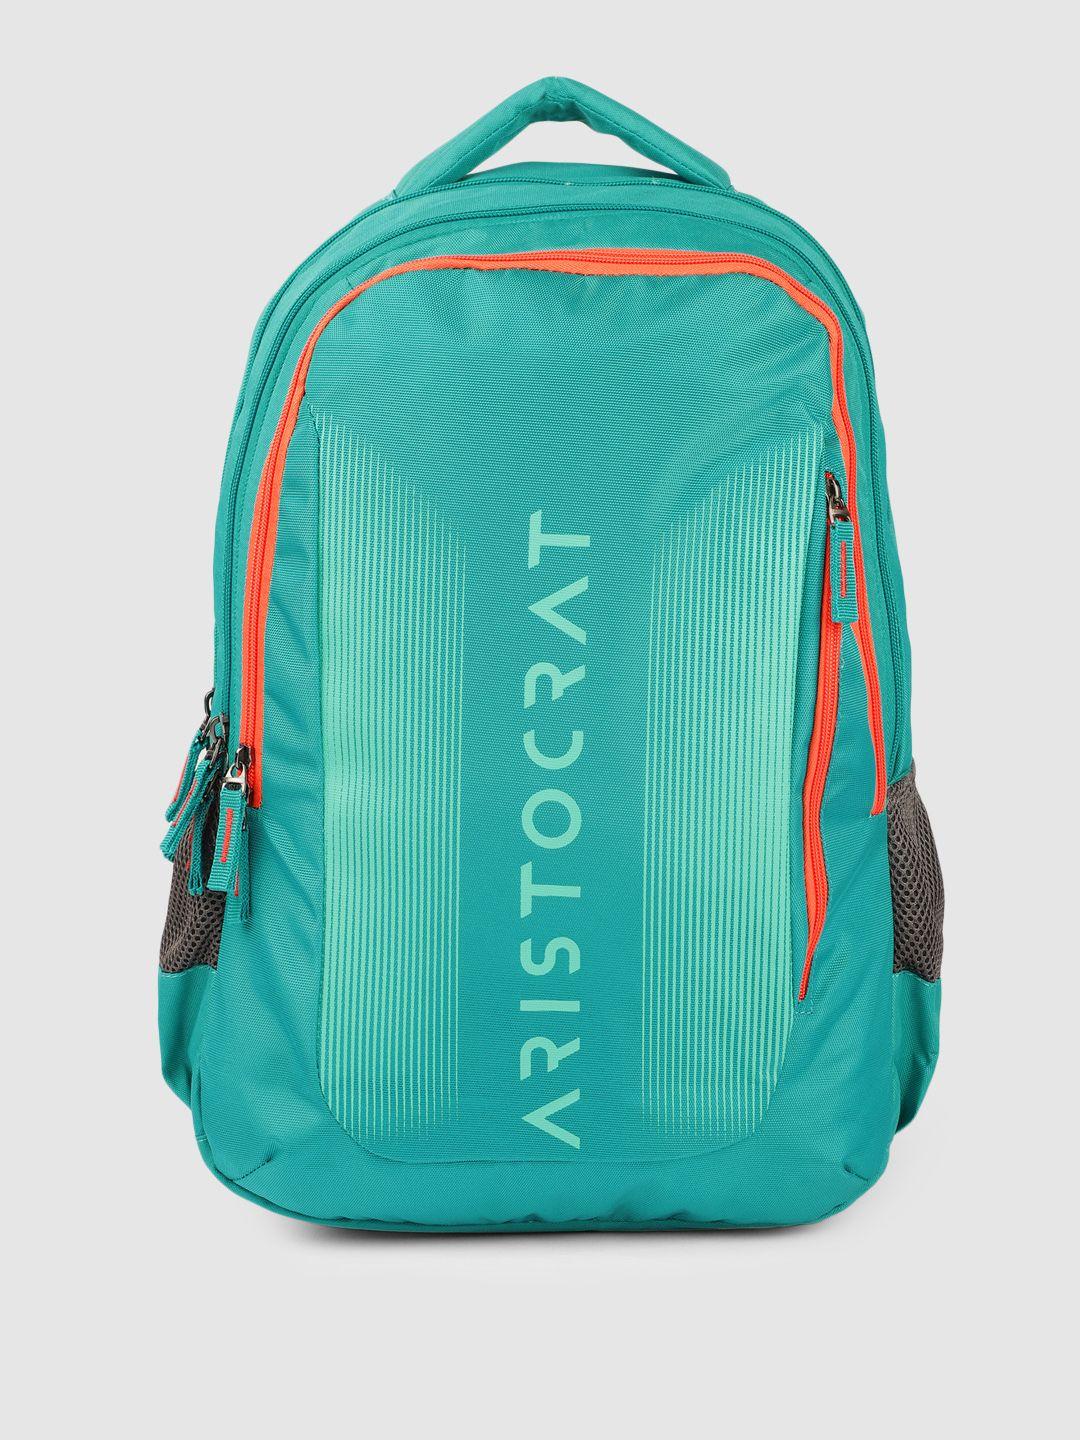 aristocrat unisex teal blue brand logo backpack